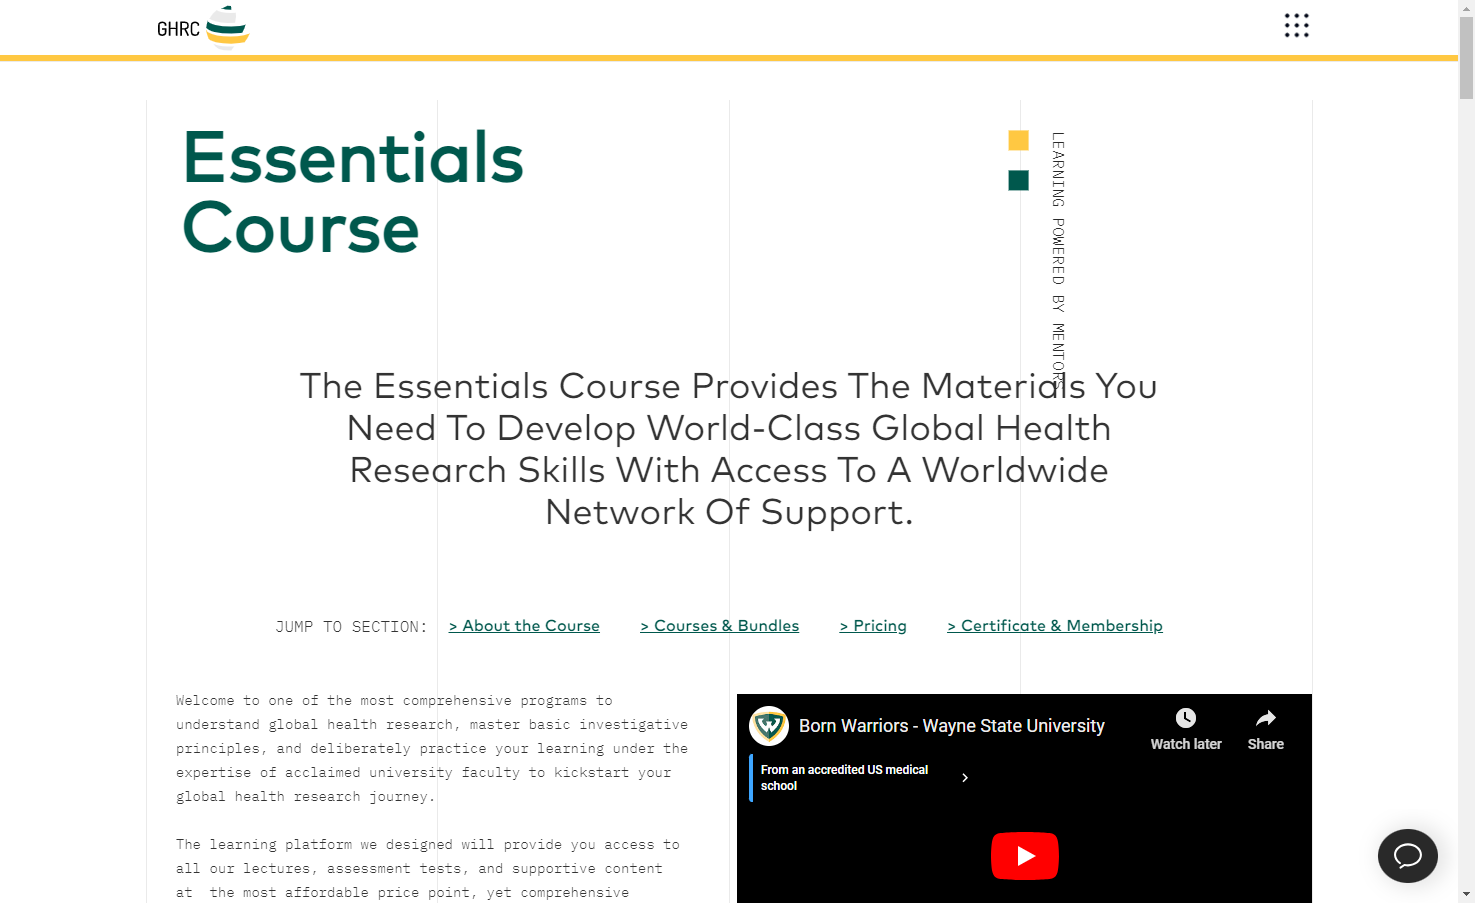 GHRC-Essentials-Course